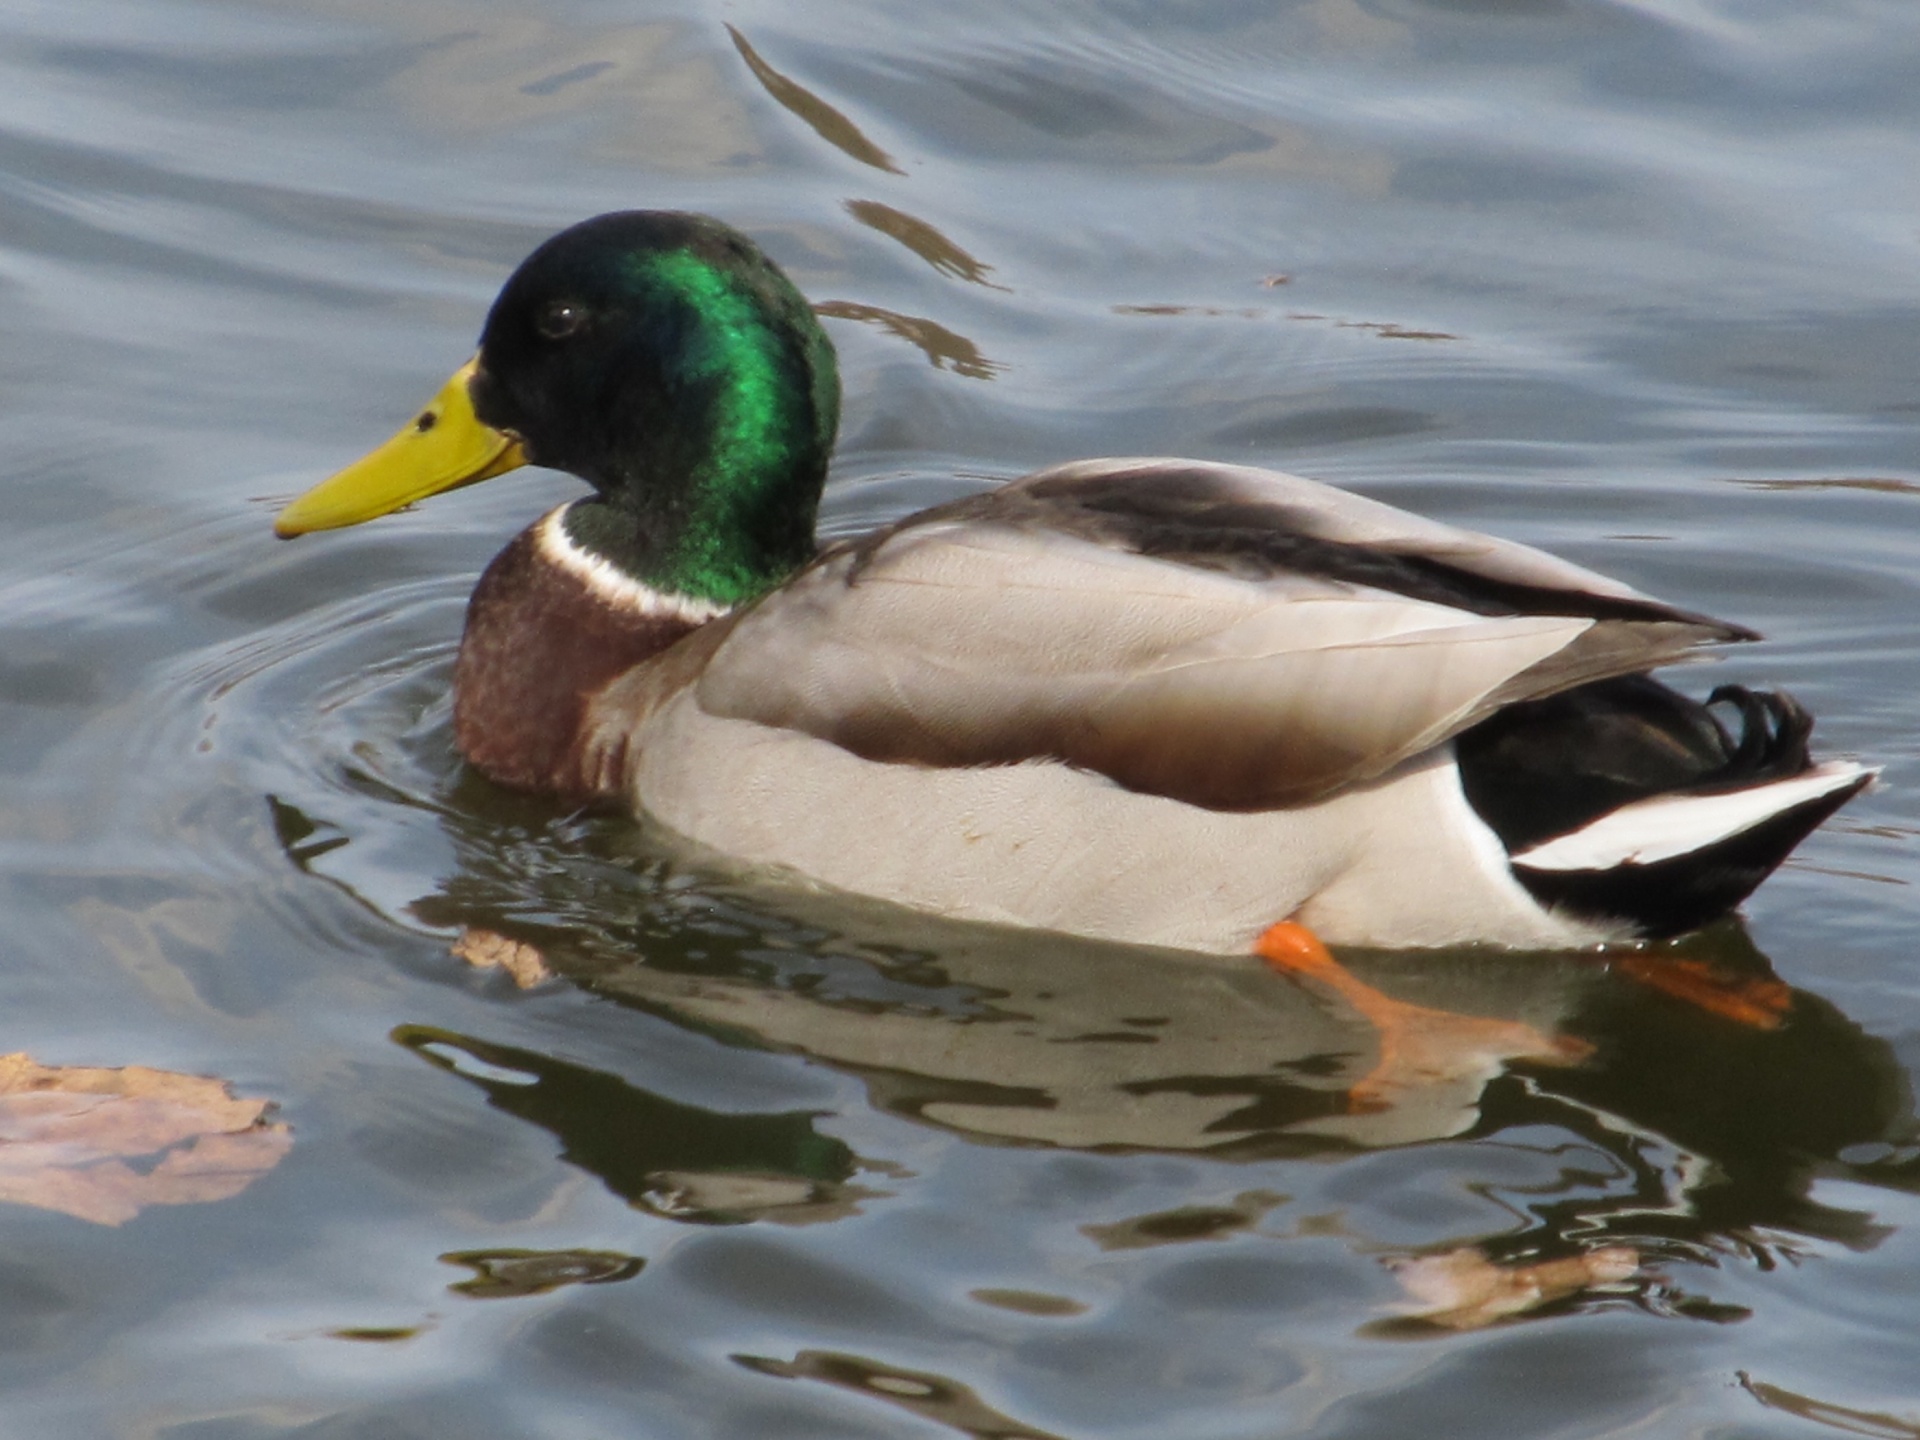 Duck Swimming